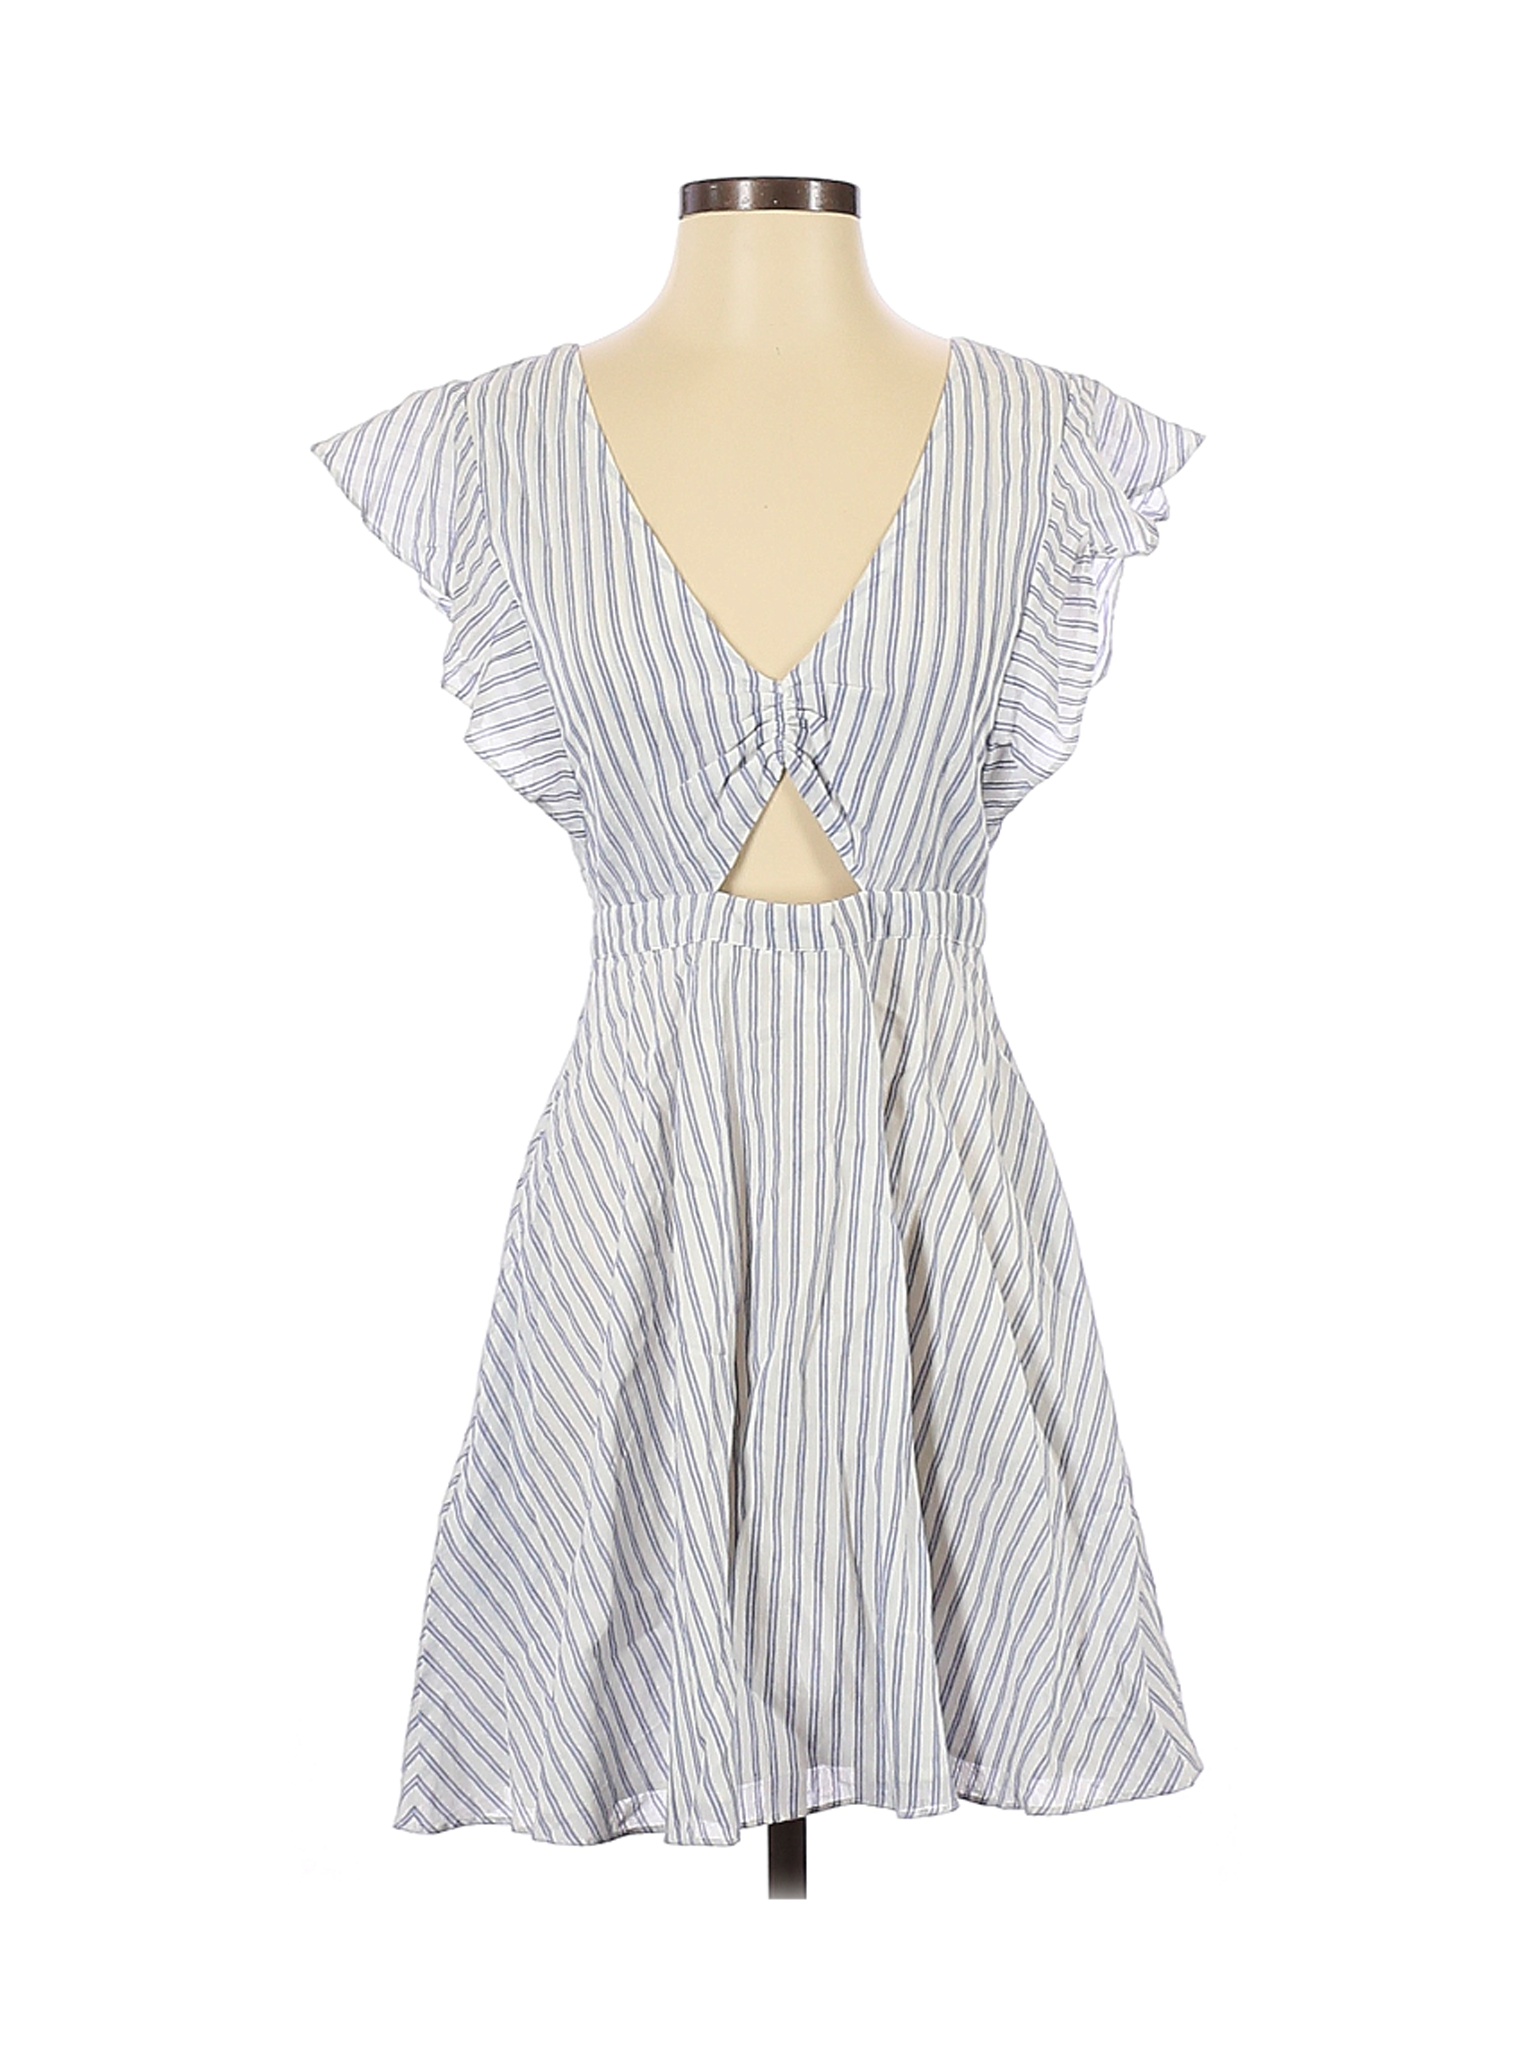 Cleobella Women Blue Casual Dress S | eBay